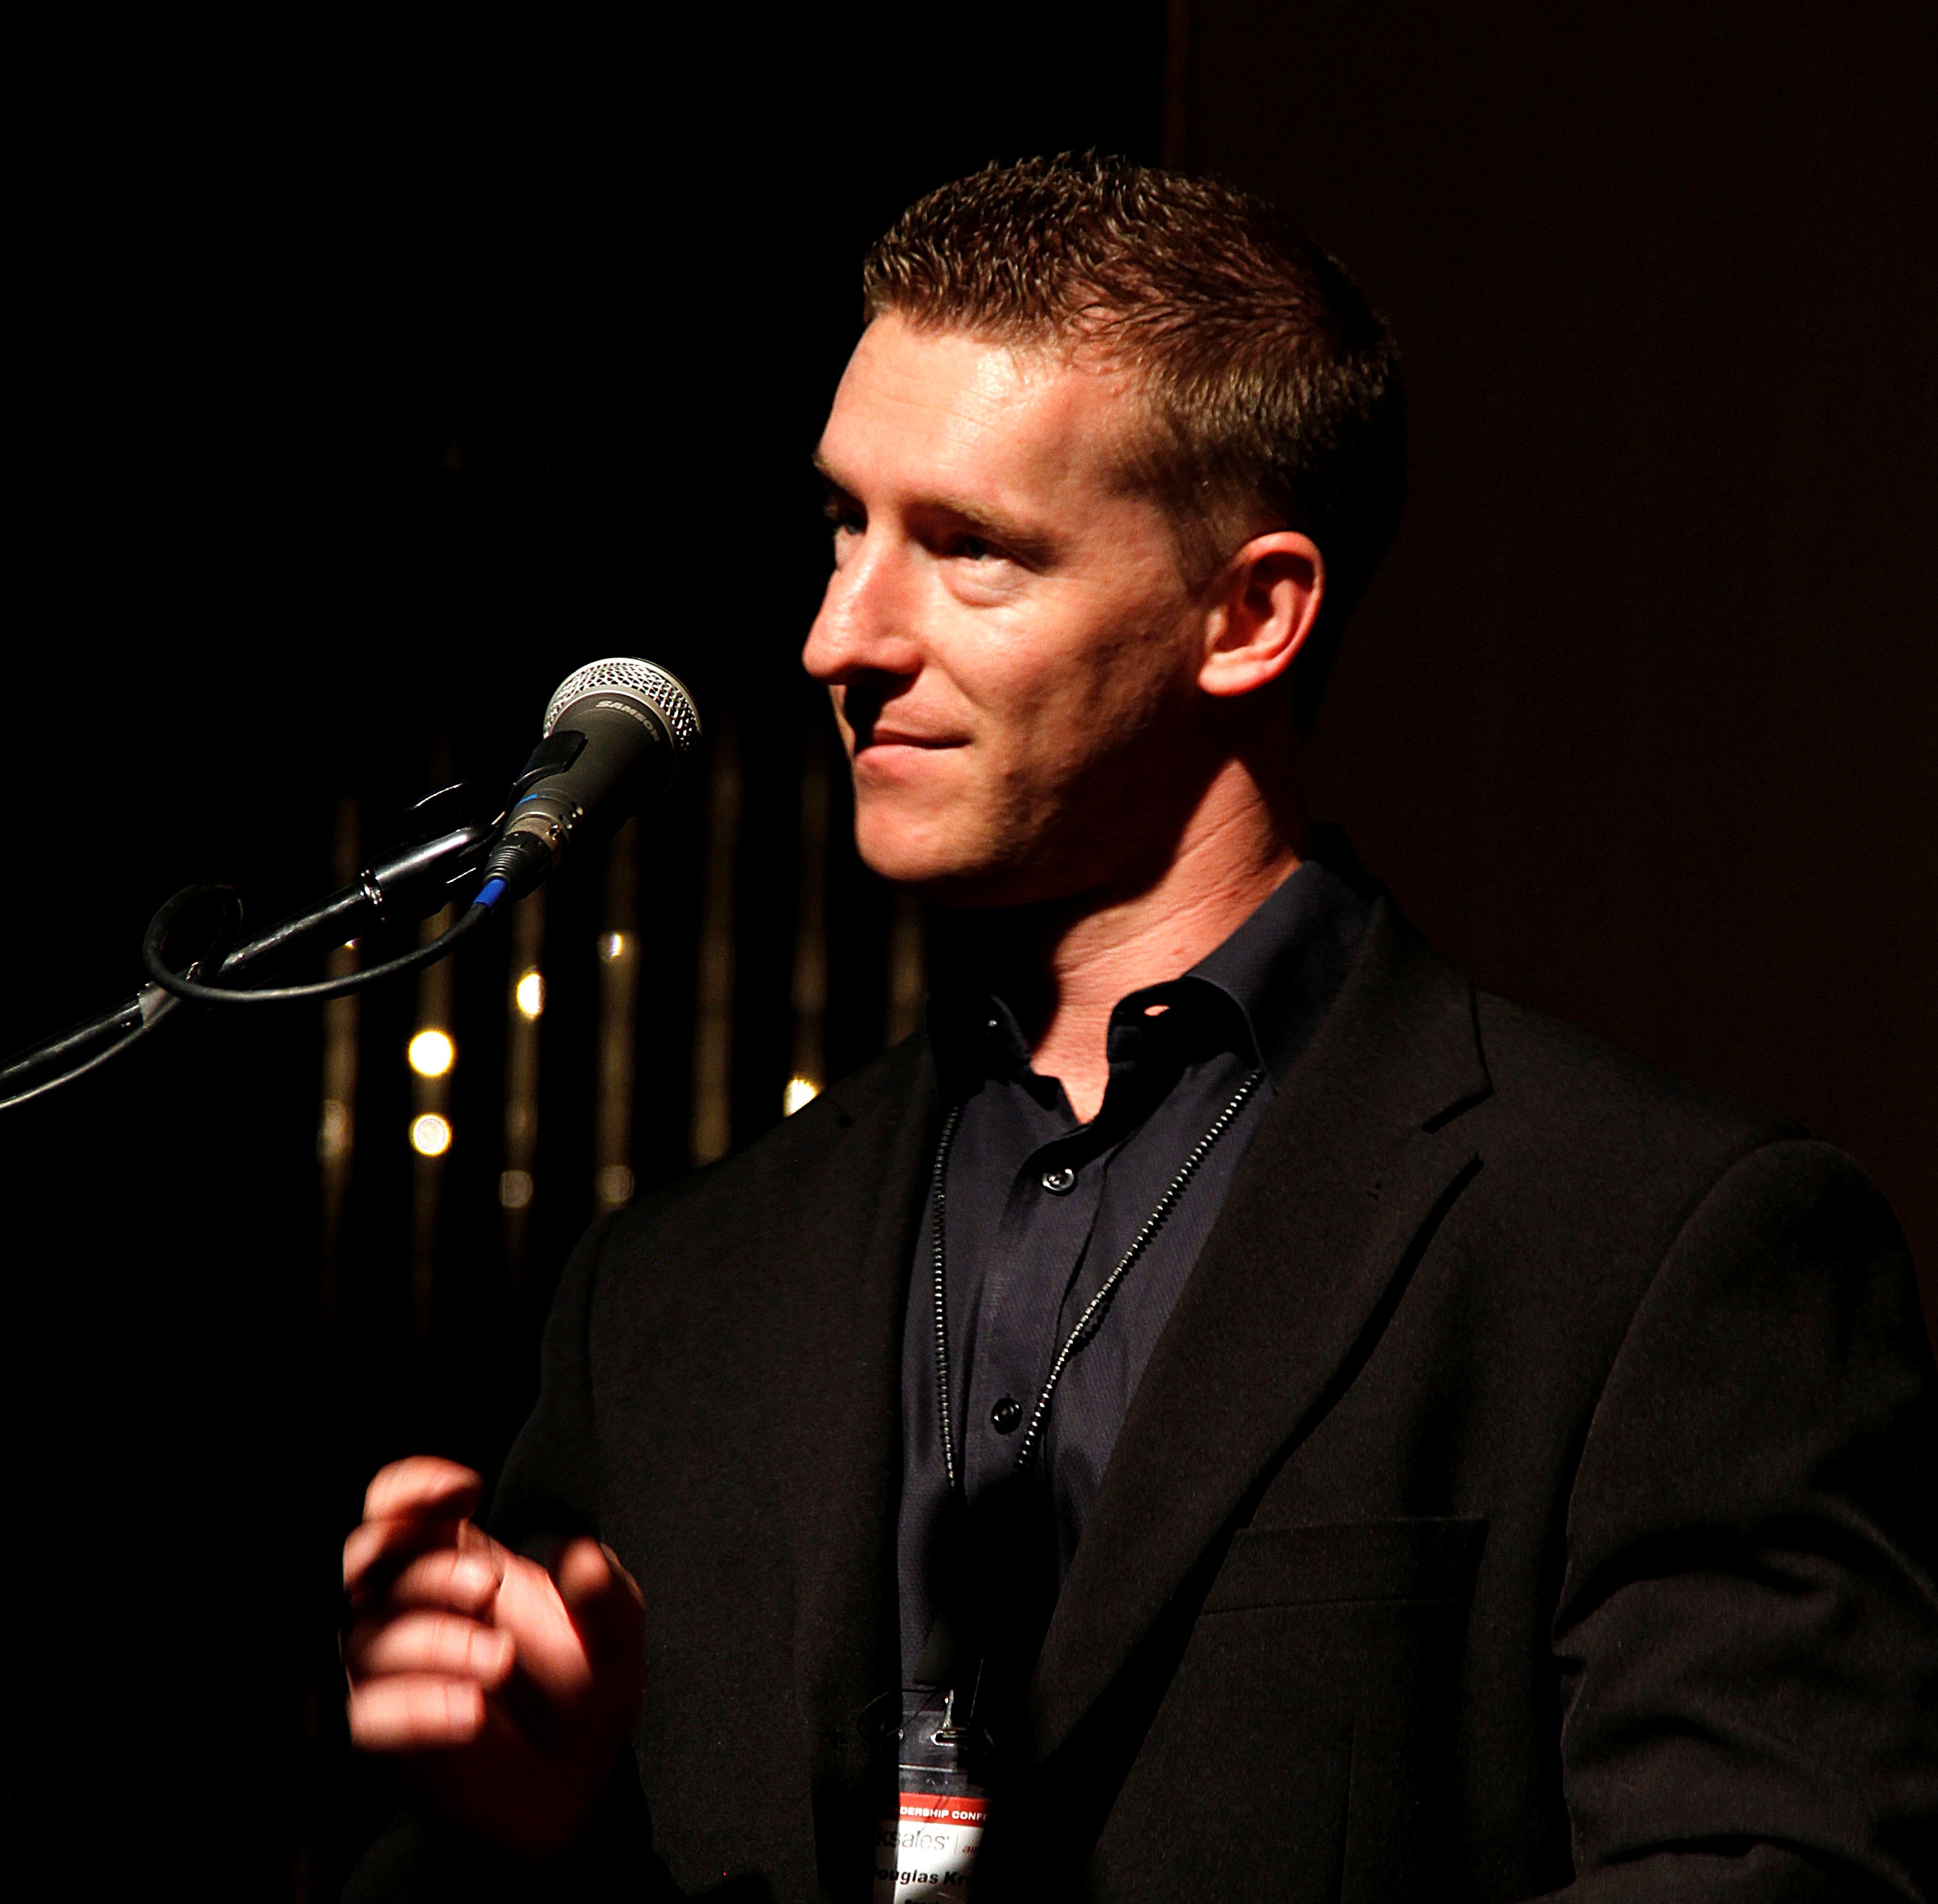 Professional Speaker and Author, Douglas Kruger